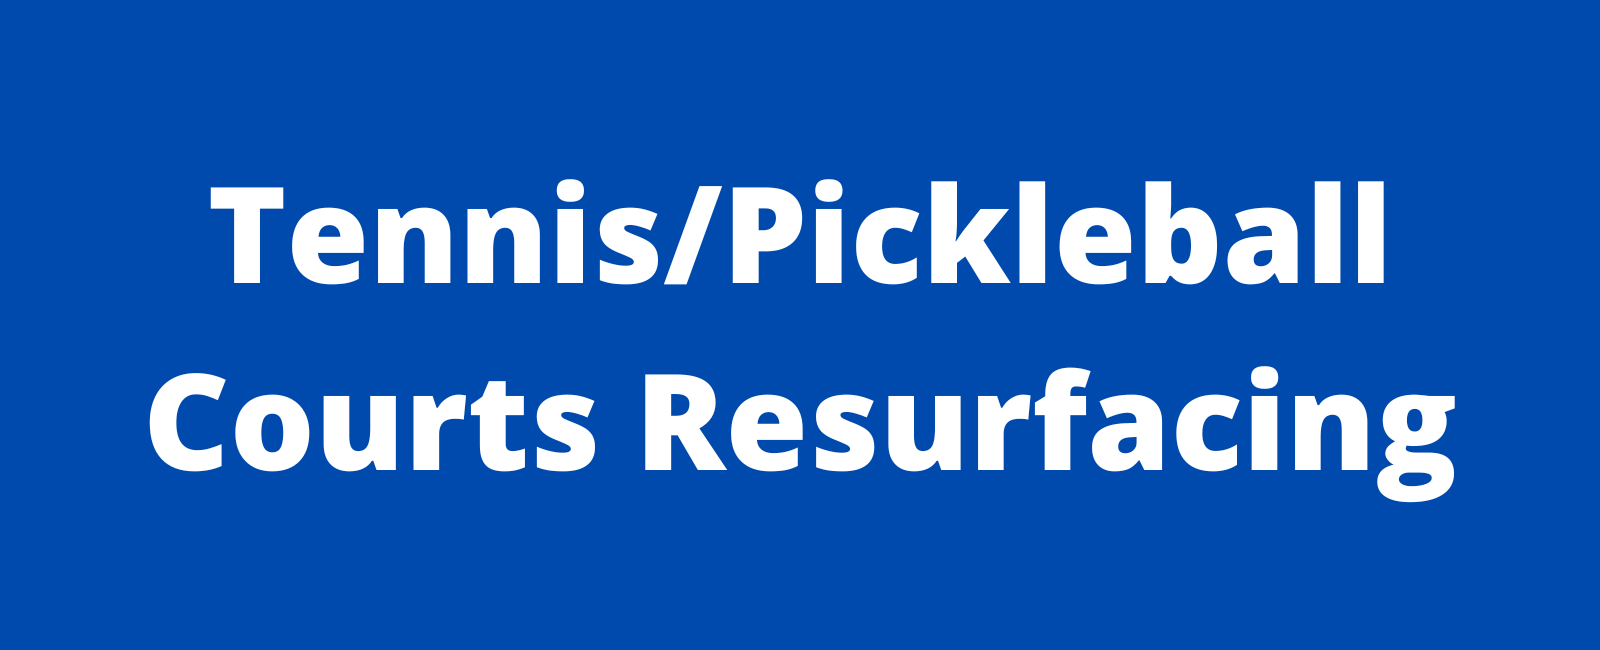 Tennis/Pickleball Courts Resurfacing